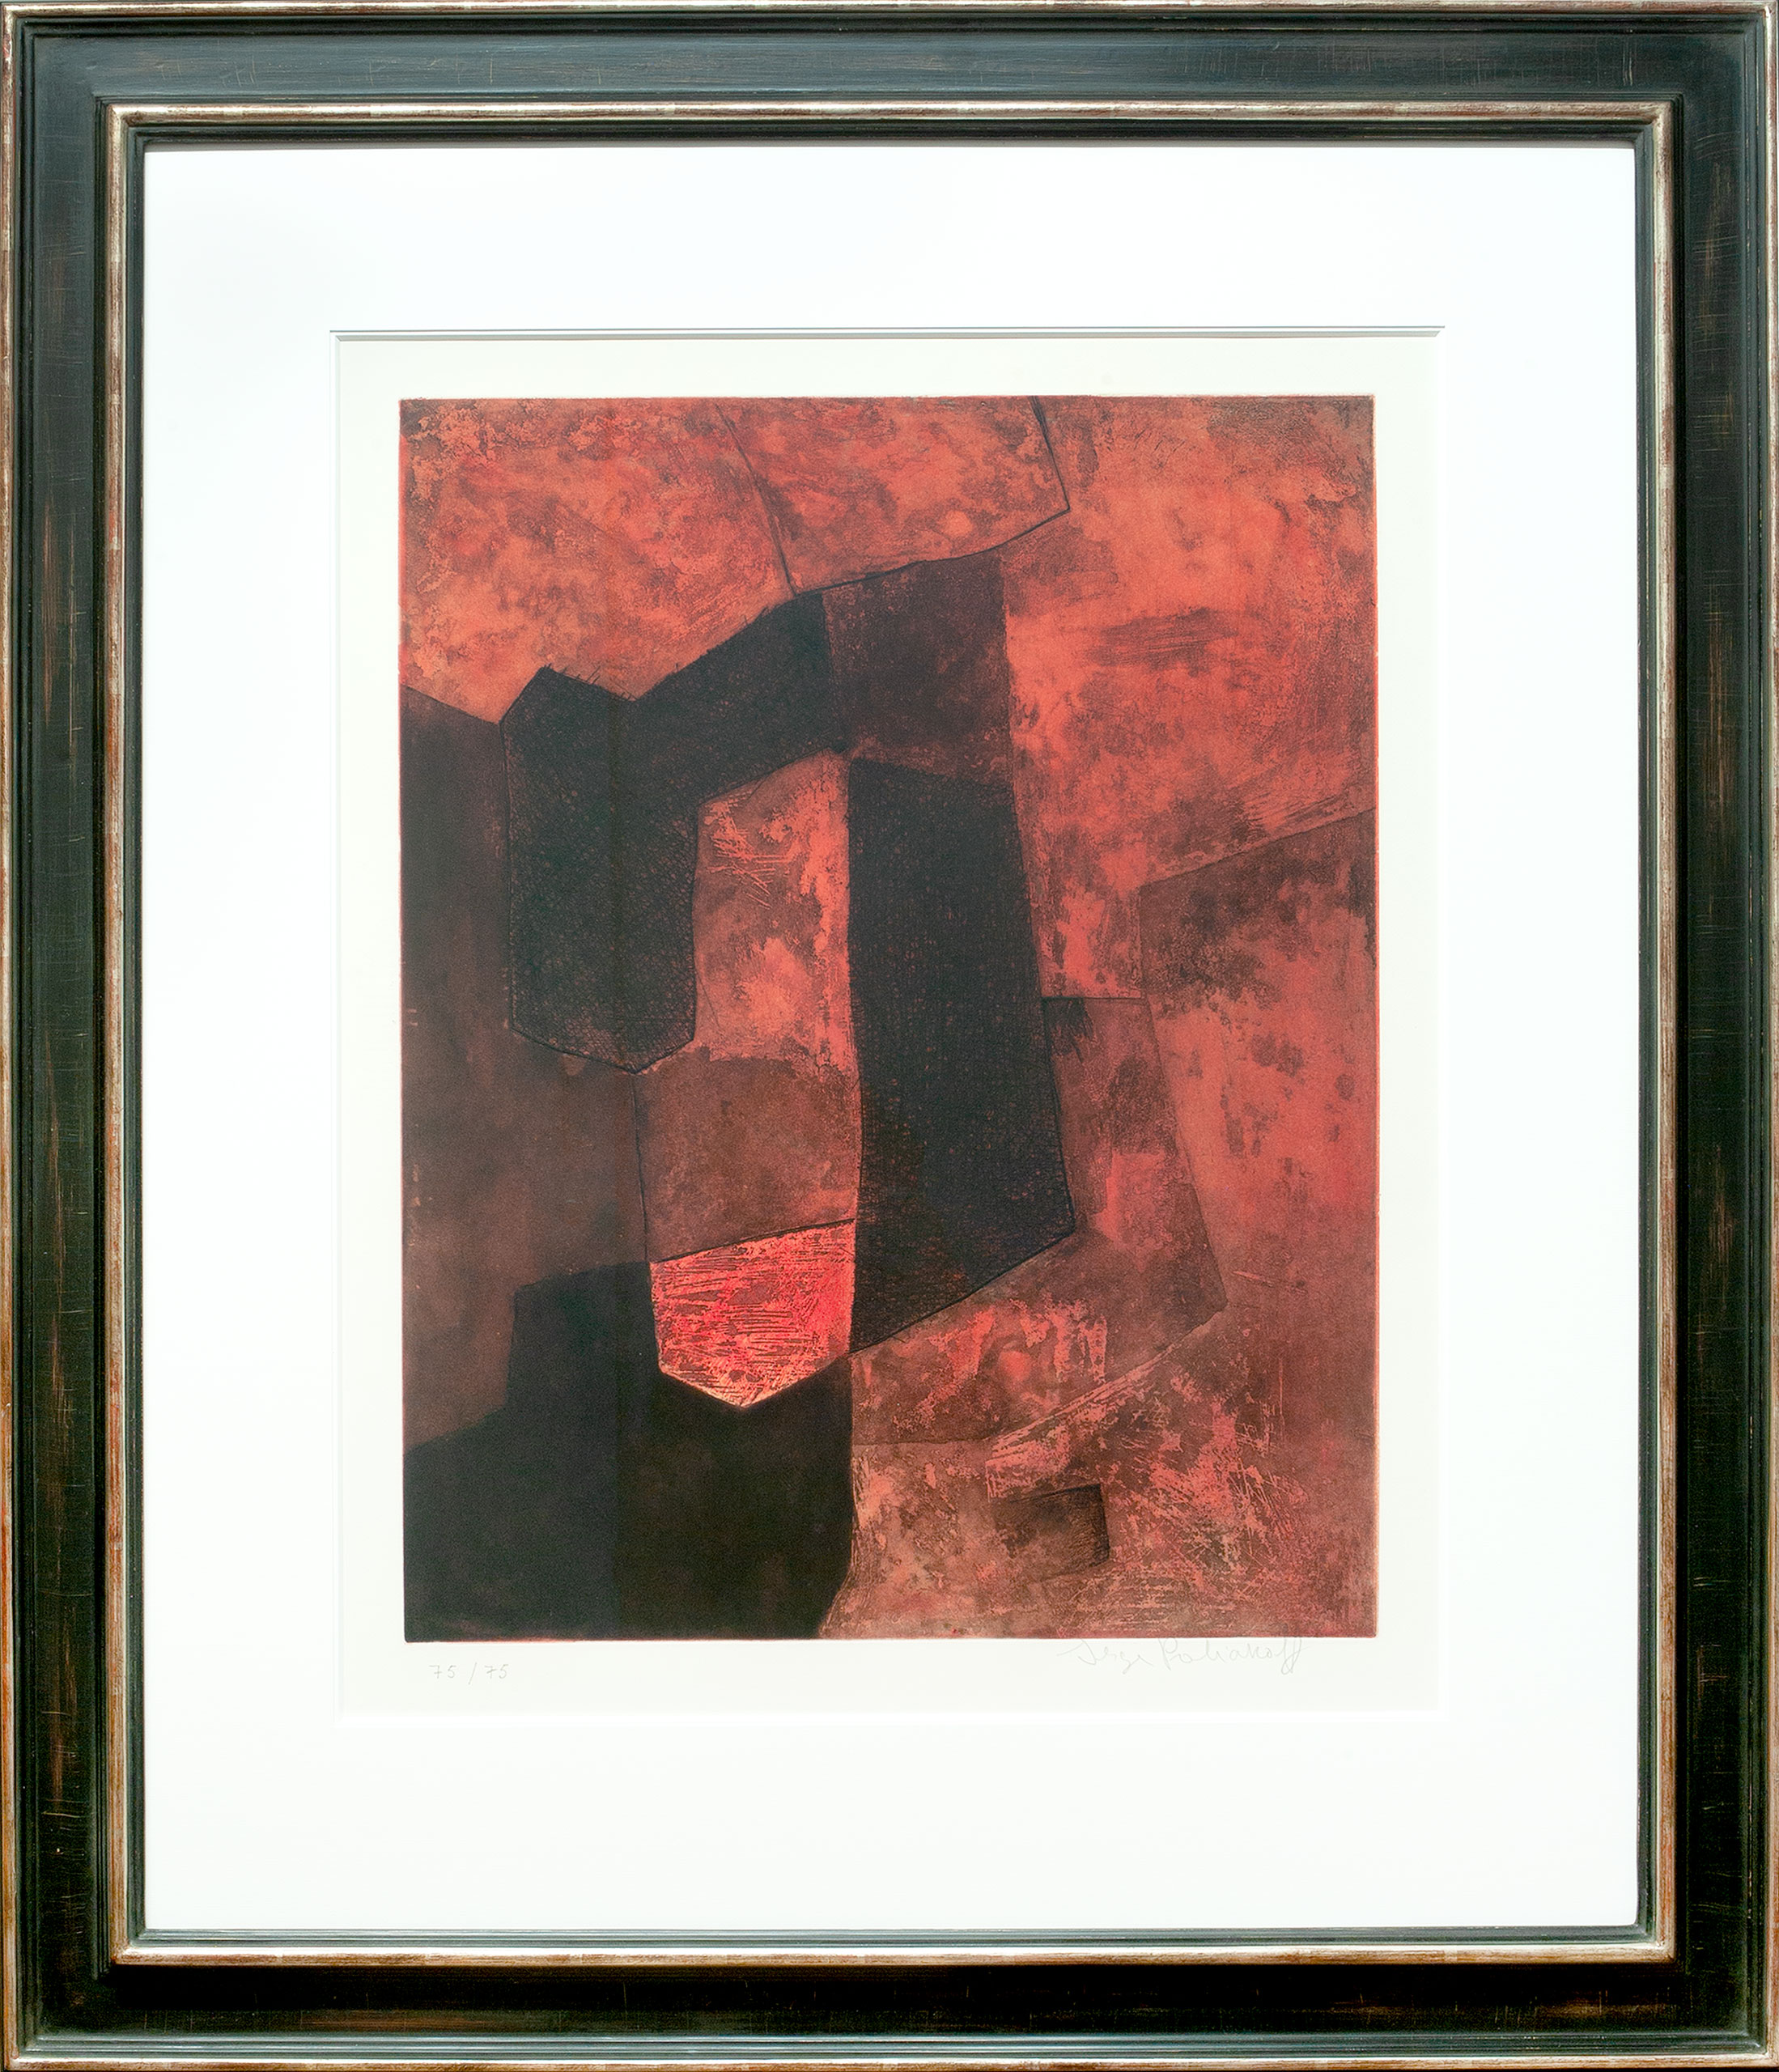 Serge Poliakoff, Composition brune et rouge, Galerie Française